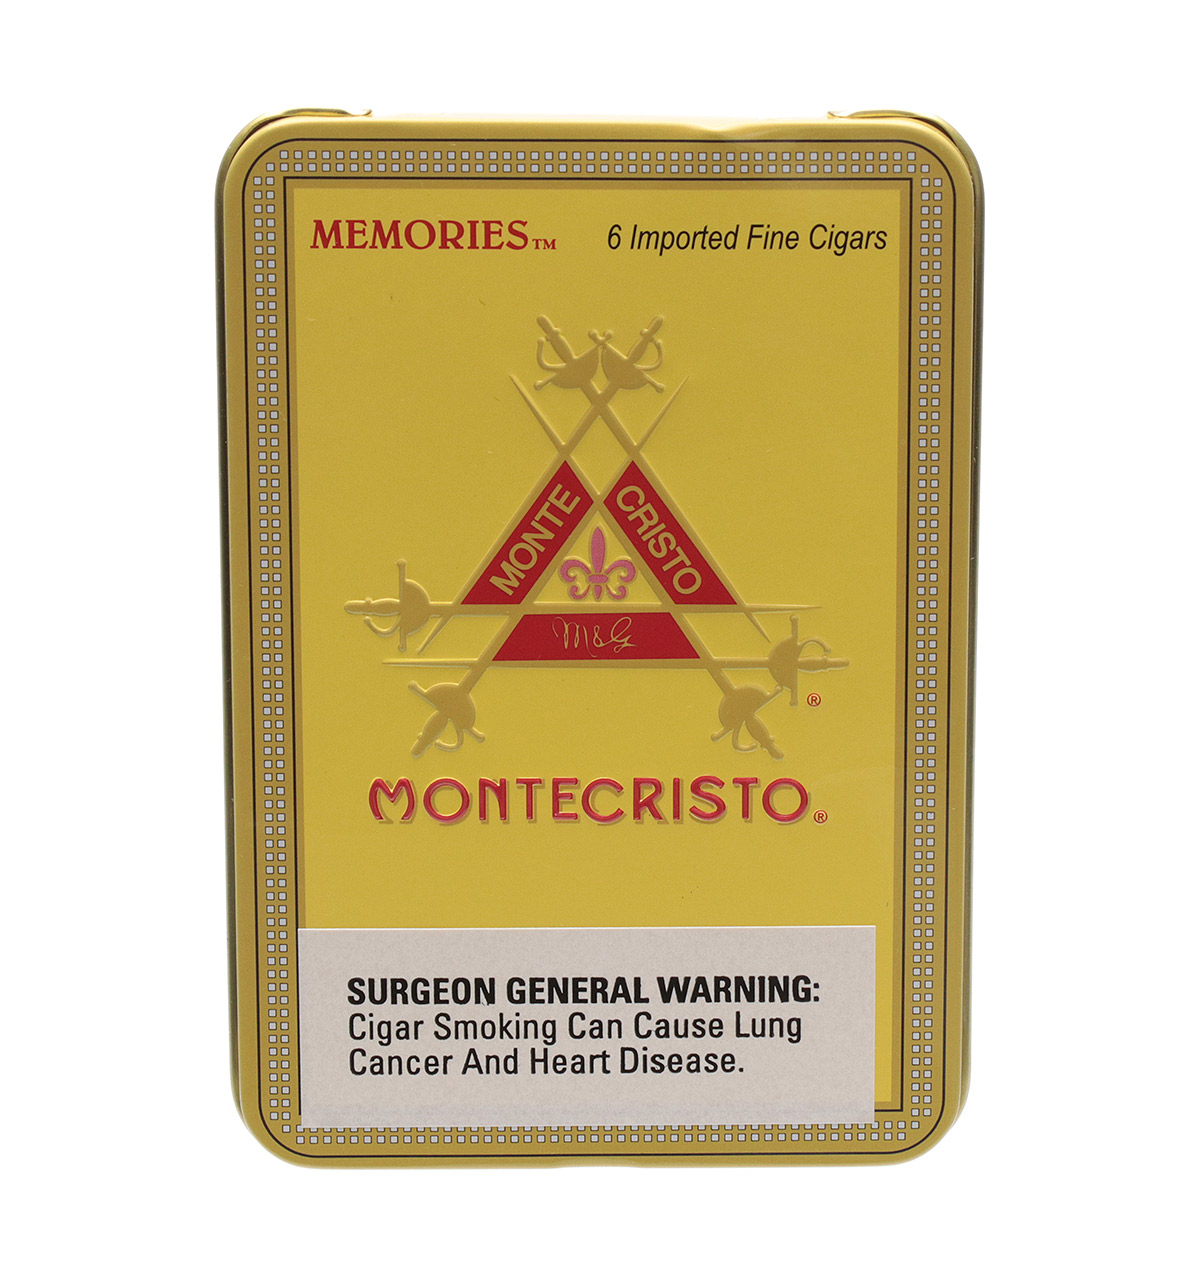 Montecristo Memories (6 Pack)